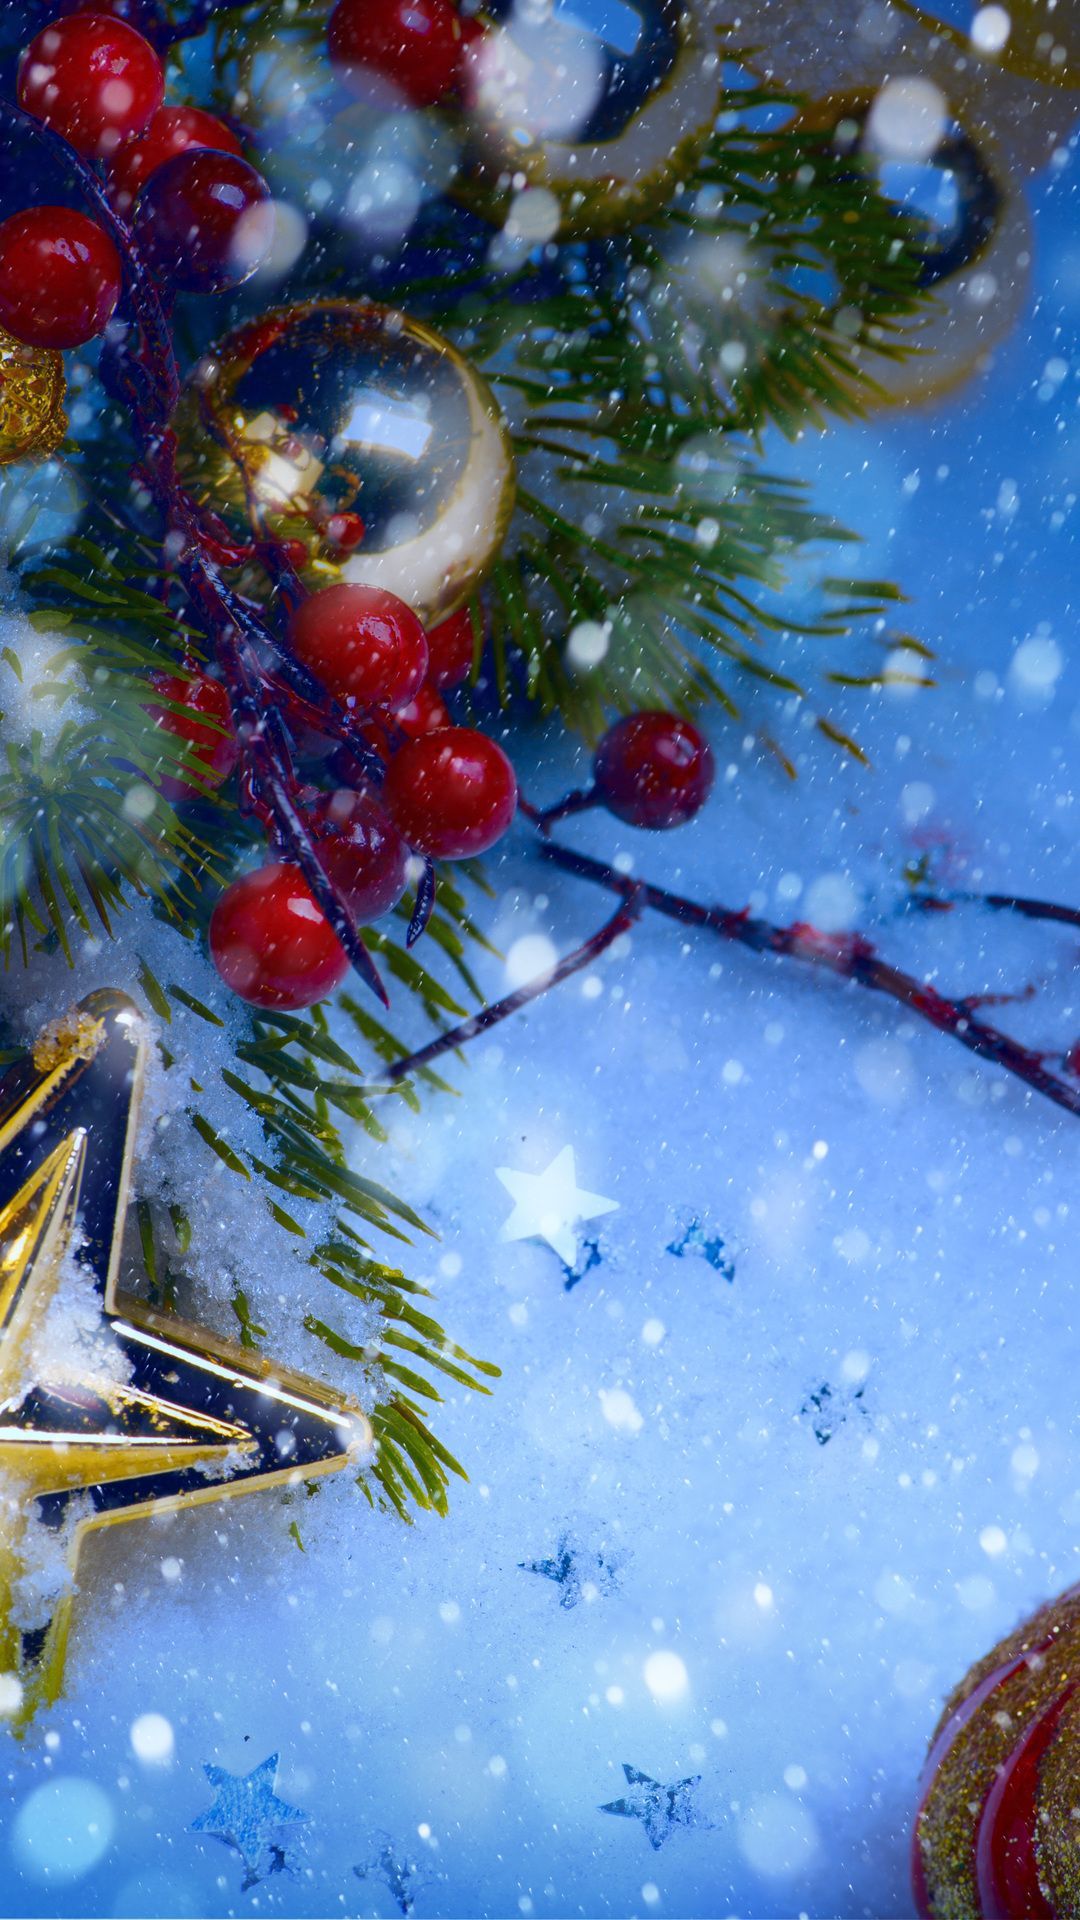 Christmas time and winter wonderland. Christmas desktop wallpaper, Christmas art, Christmas card design